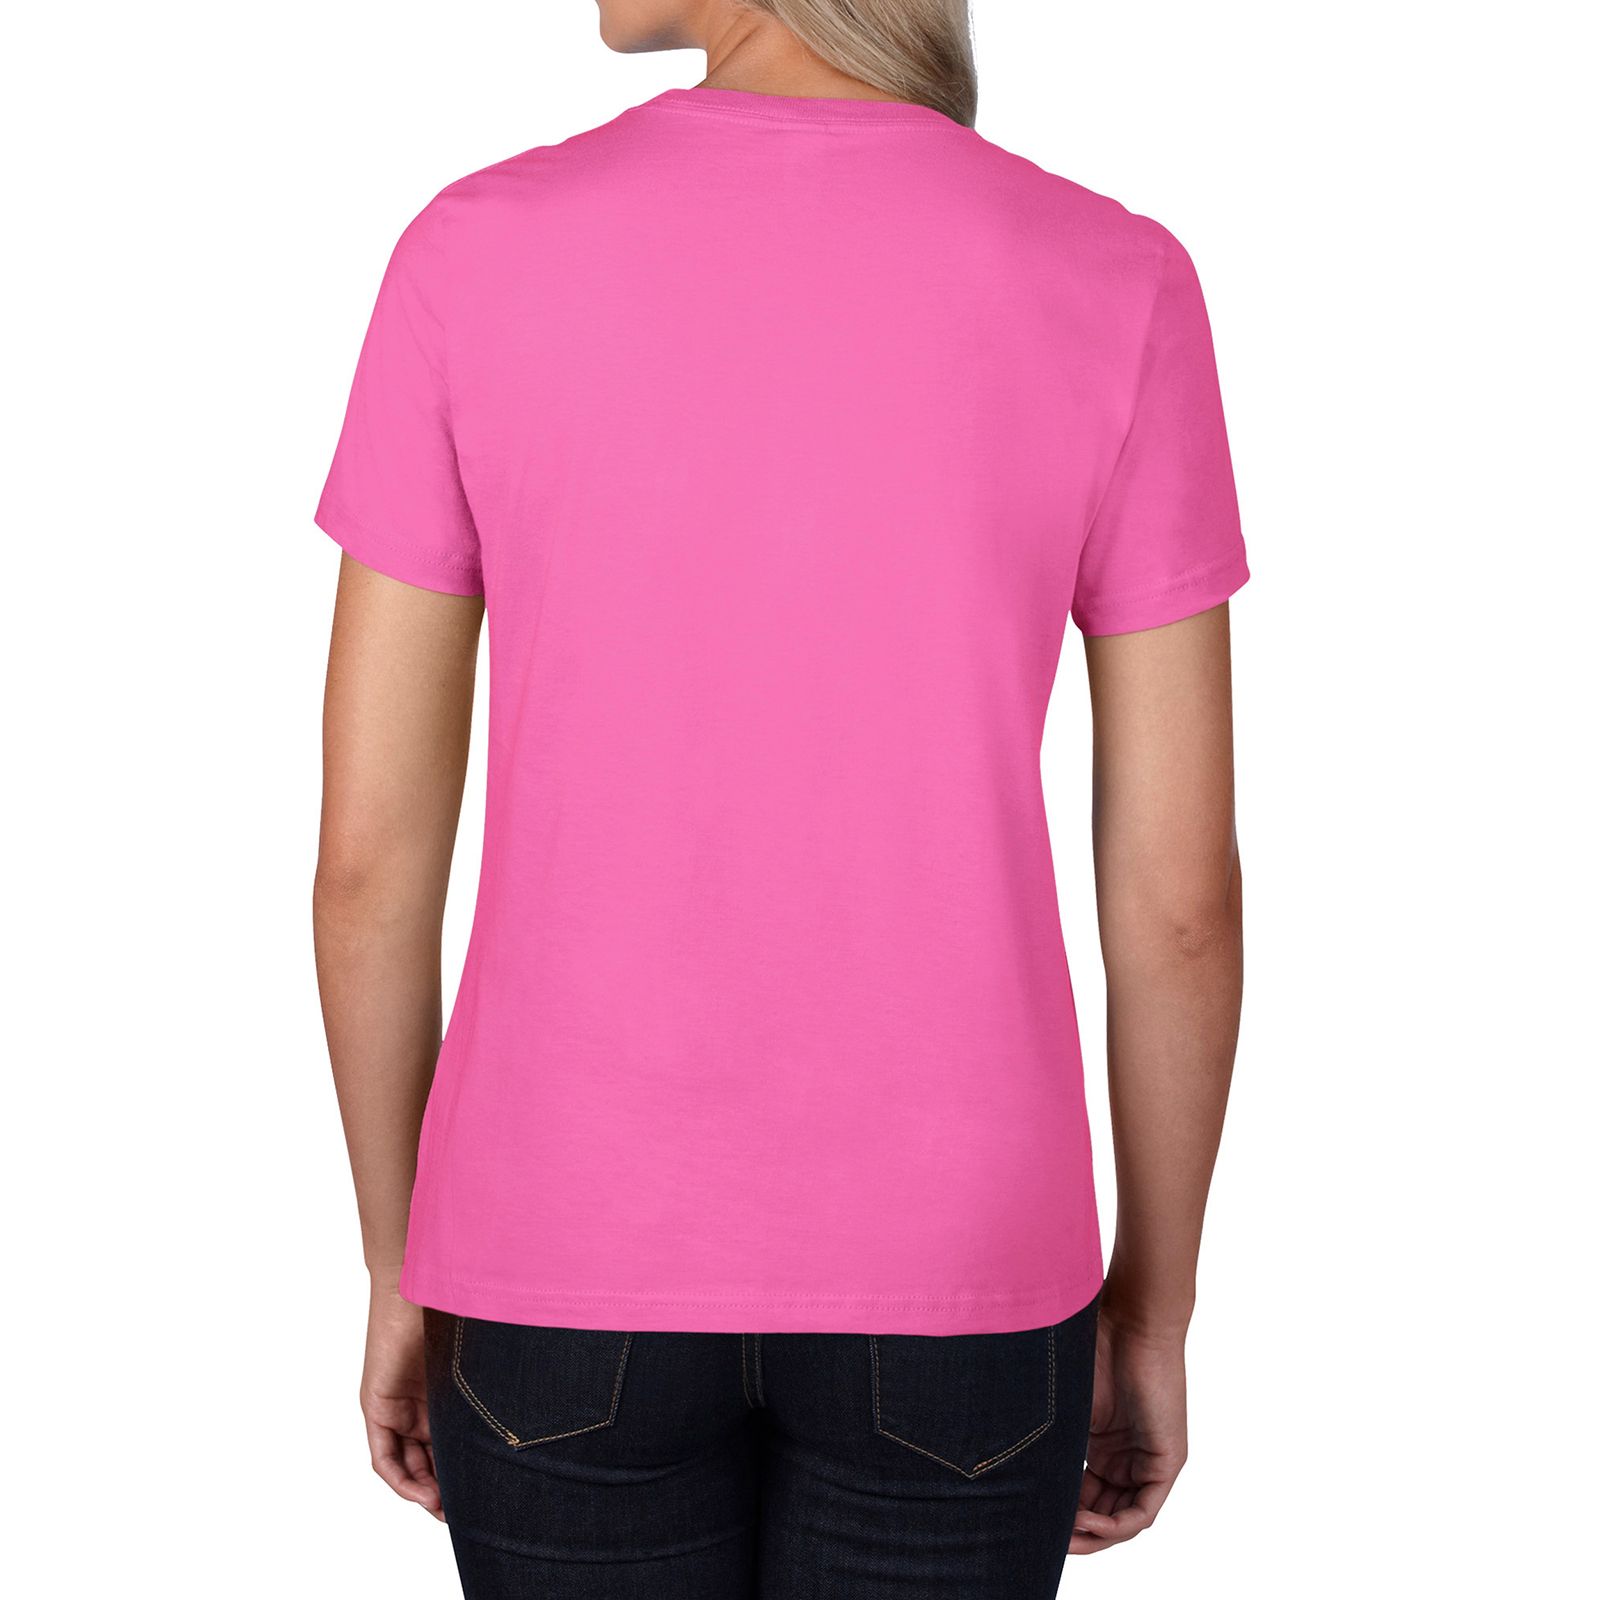 Women's T-shirt Premium Cotton 185 with your LOGO